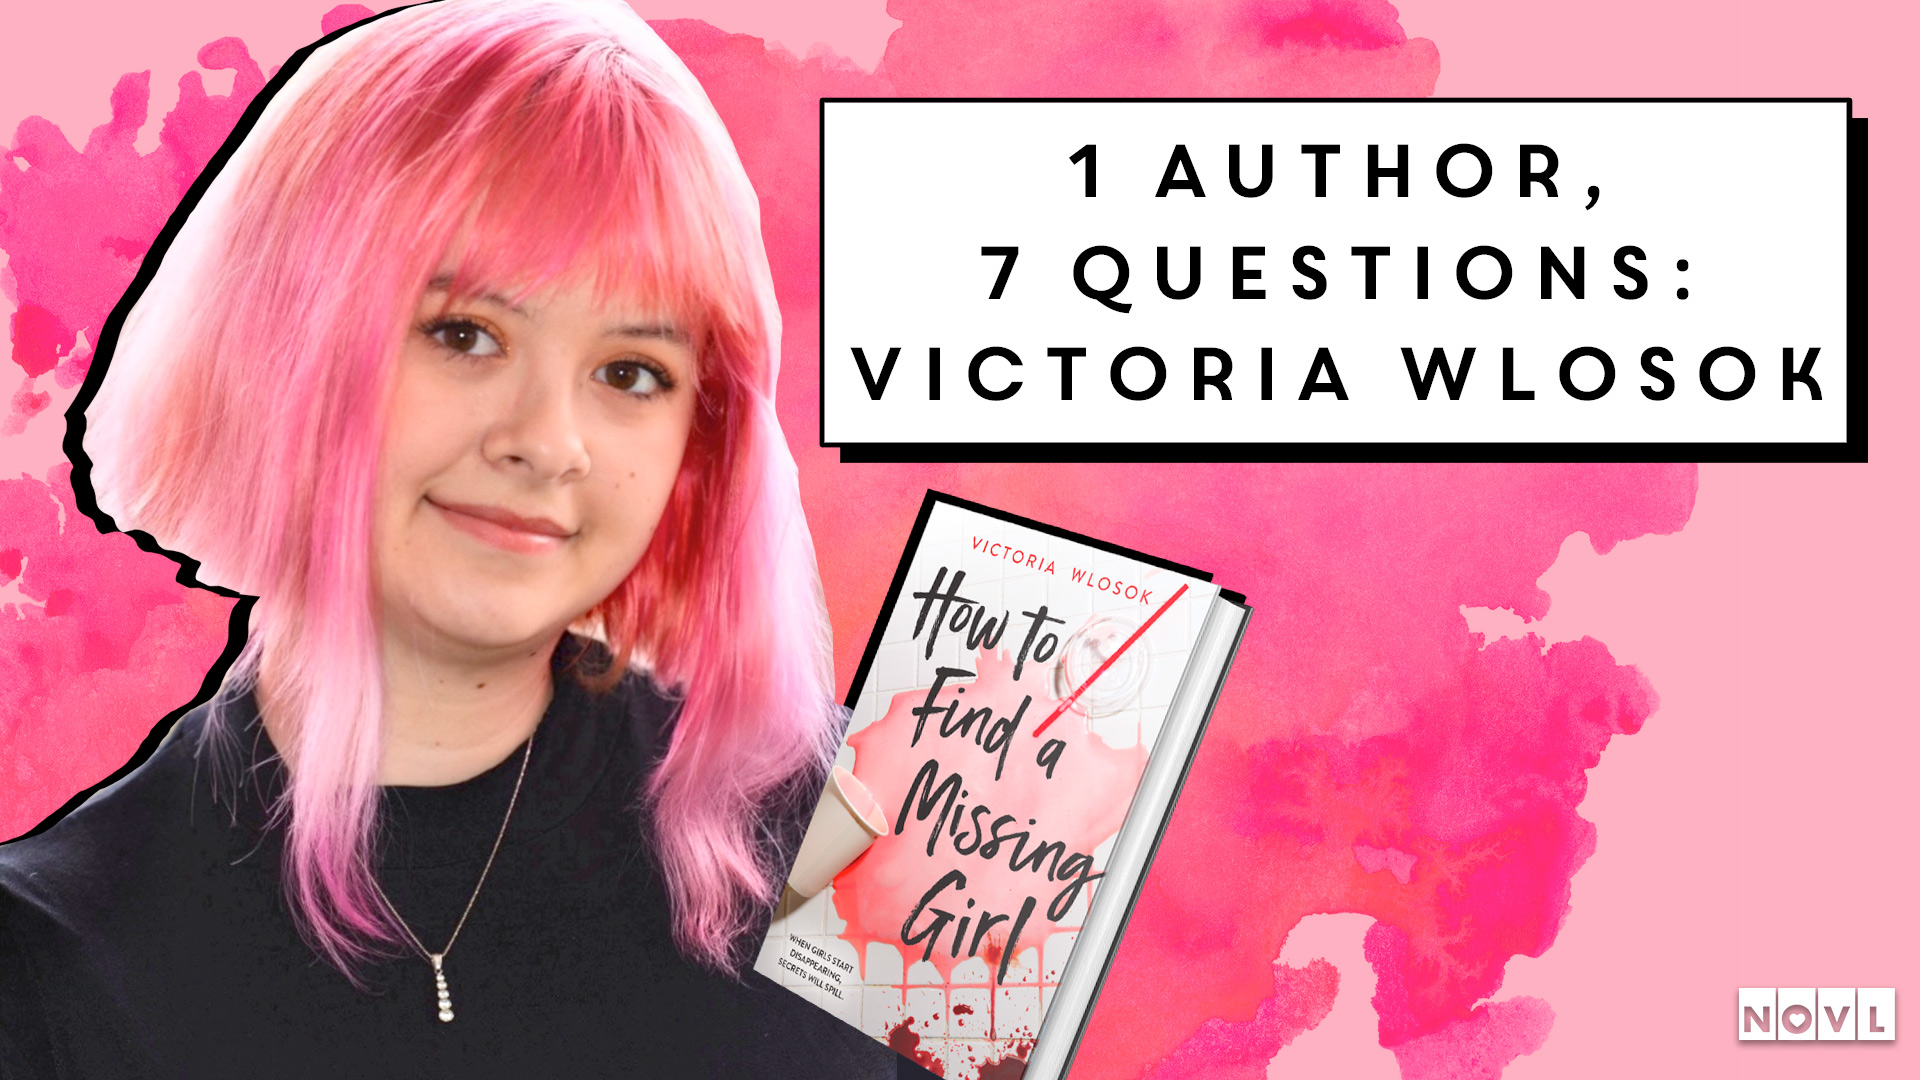 1 Author, 7 Questions: Victoria Wlosok